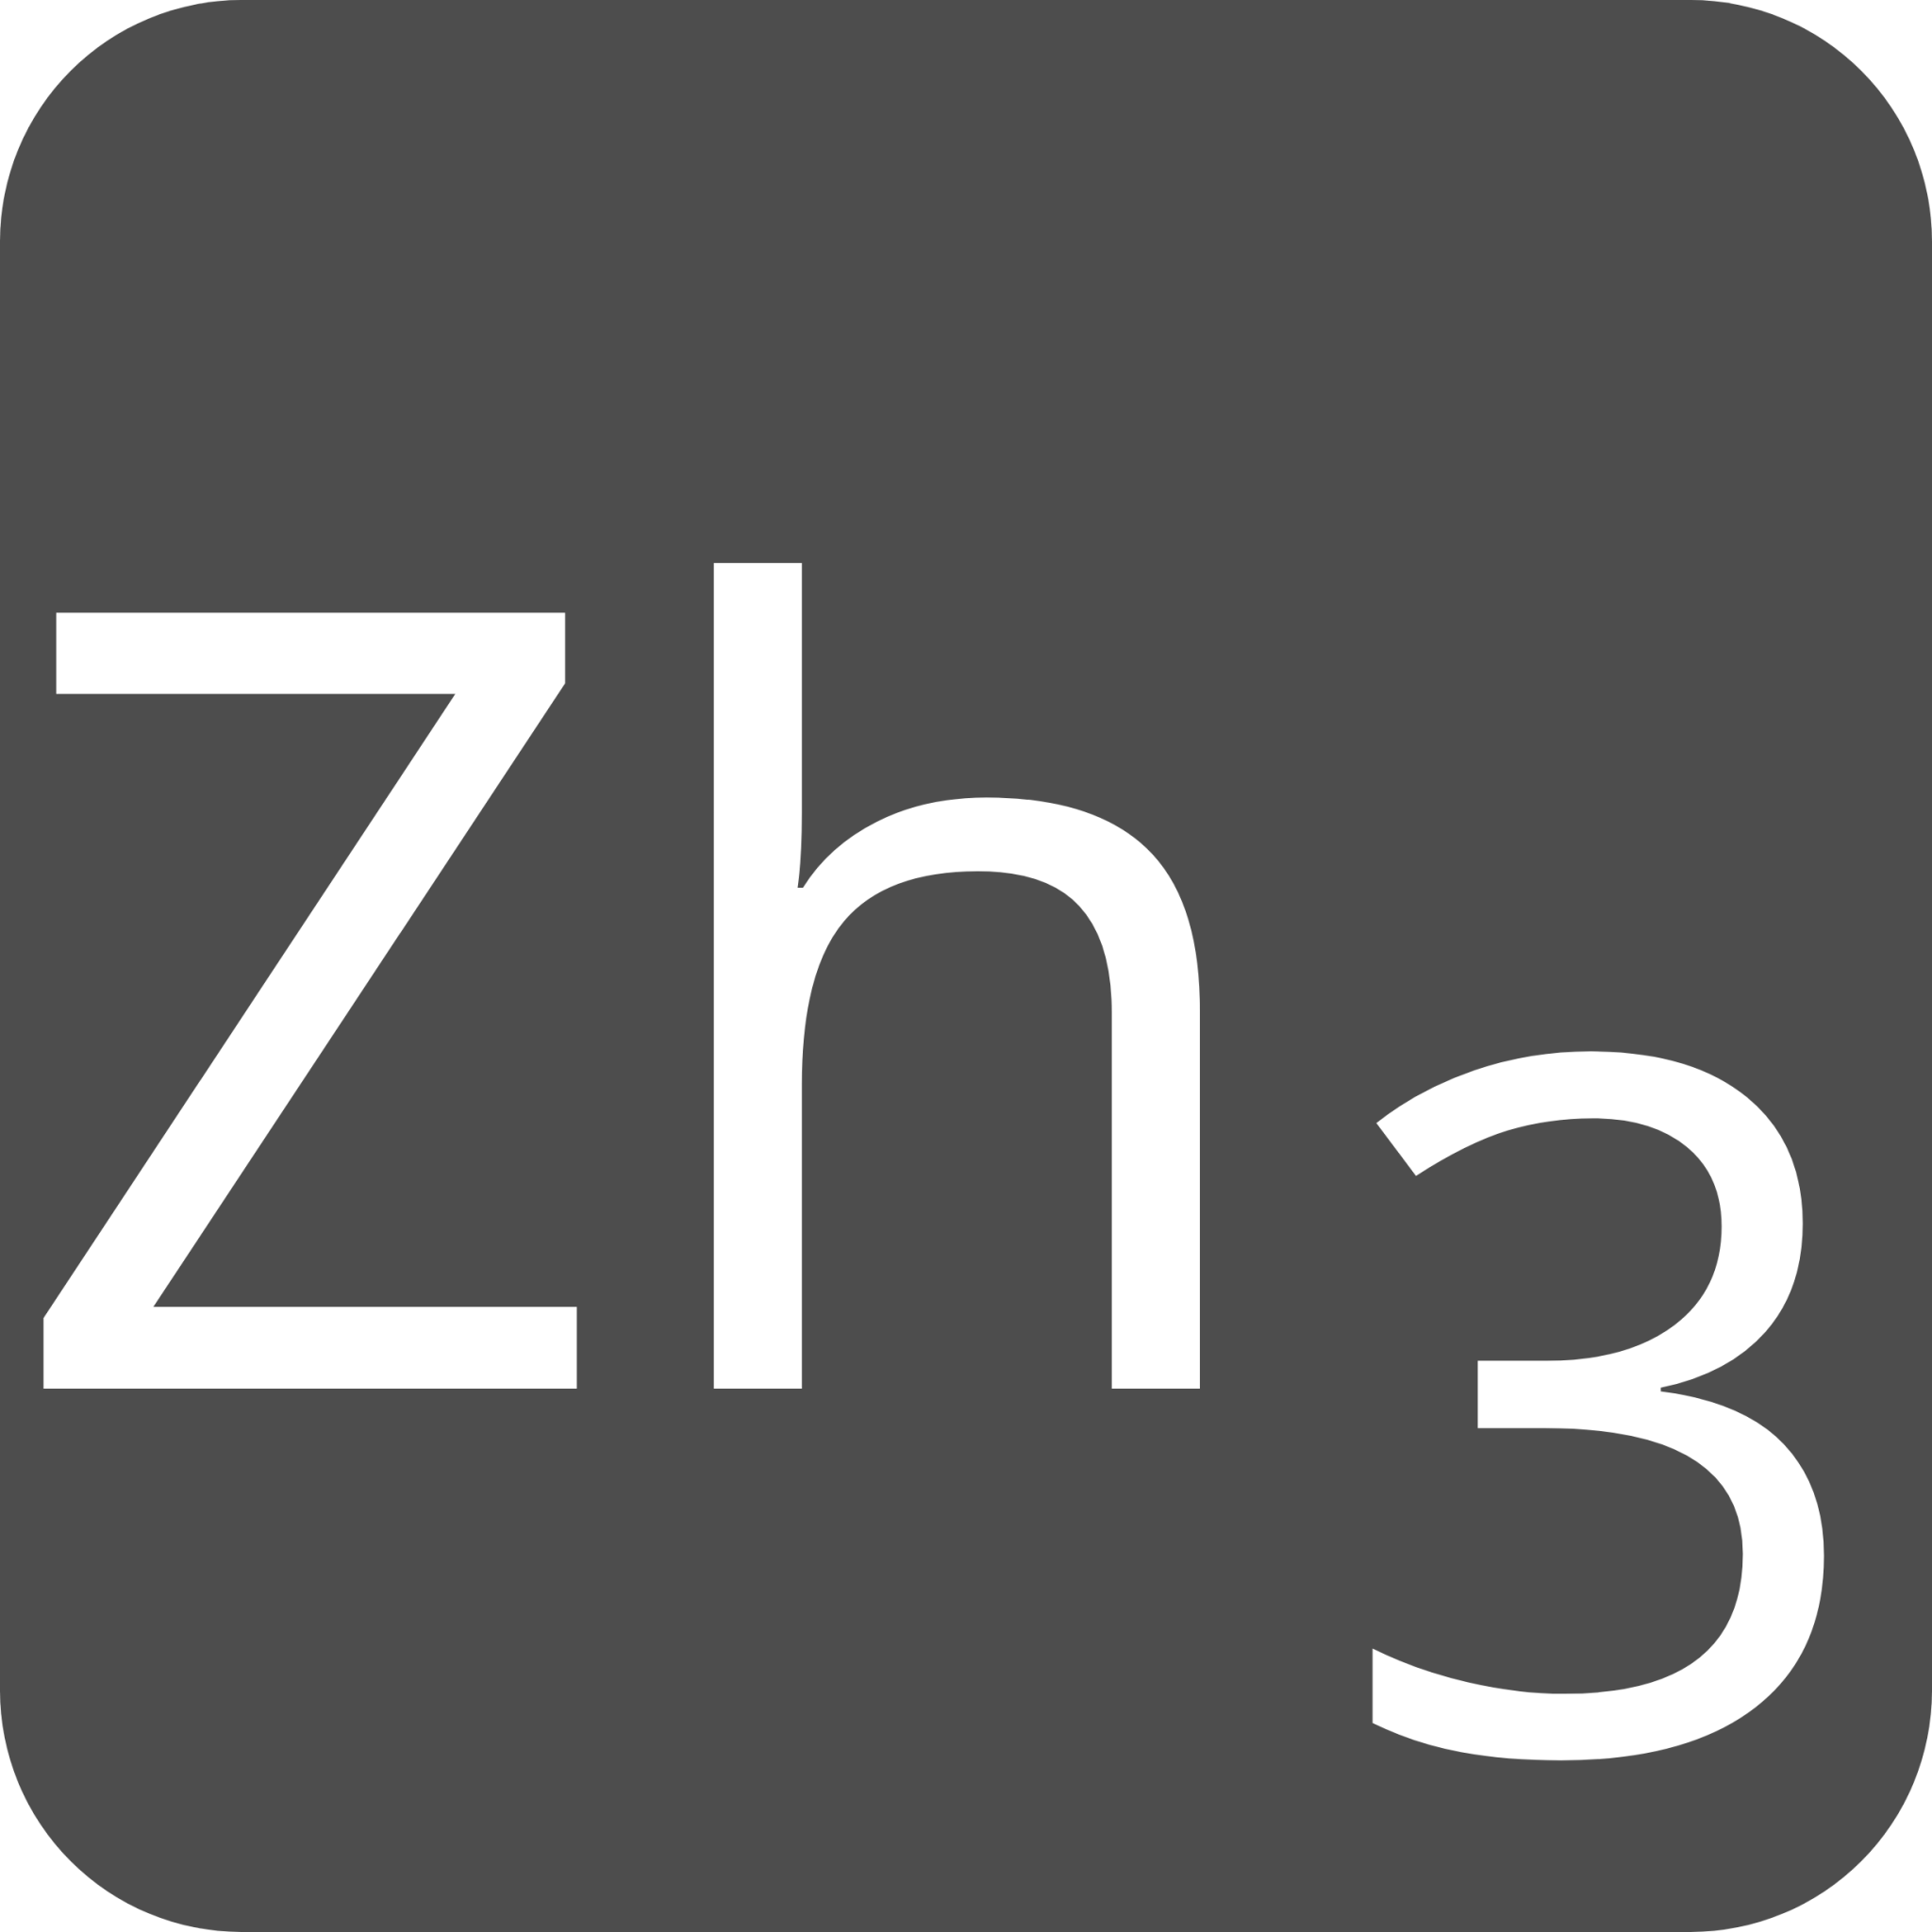 indicator keyboard Zh 3 icon